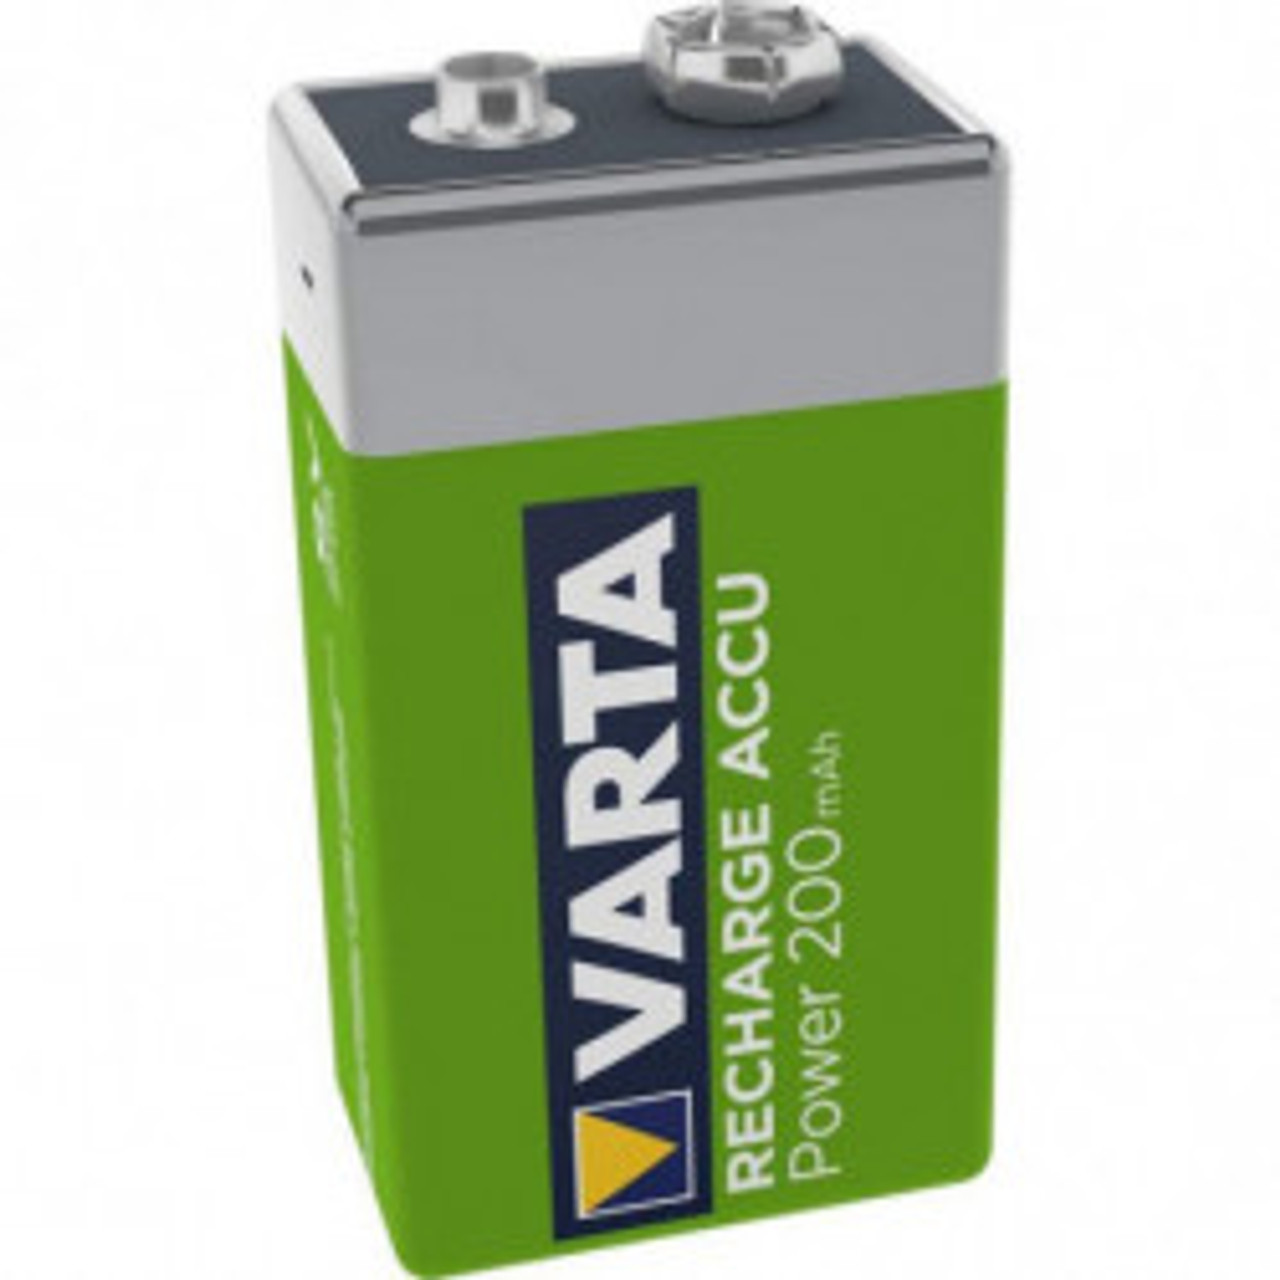 Varta P7/8H Battery 8.4V (9 Volt Case) 5622101501 Rechargeable